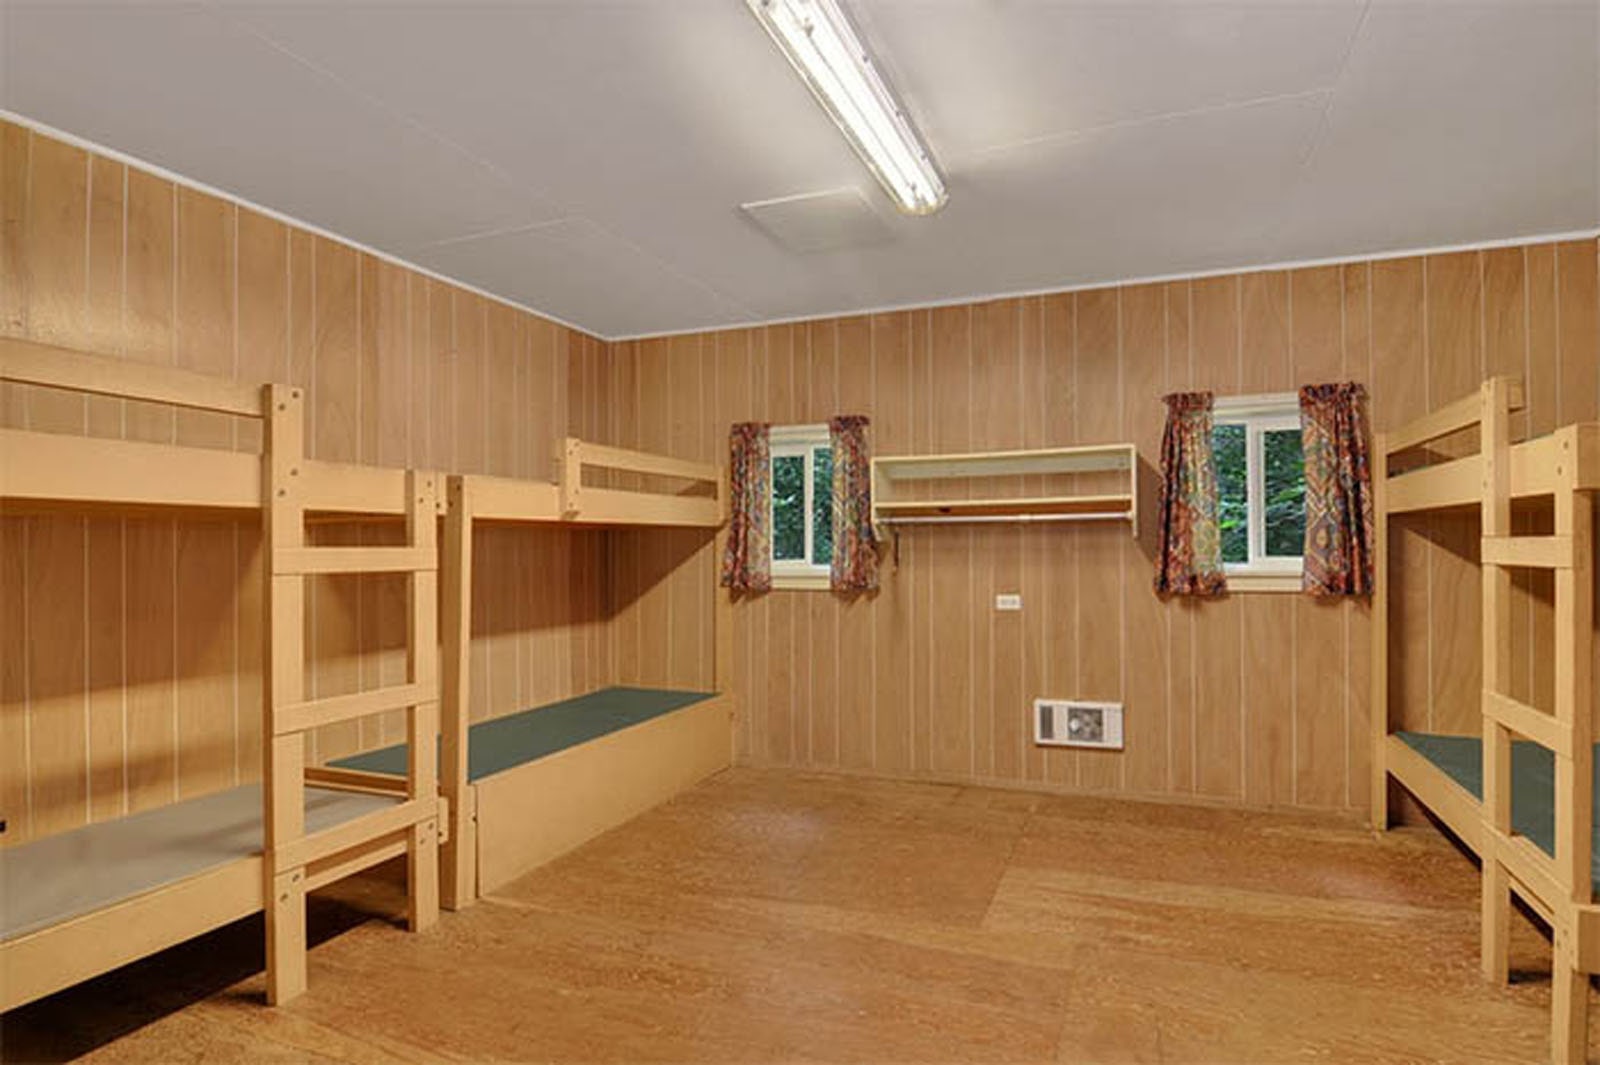 Accommodation Cabin Interior